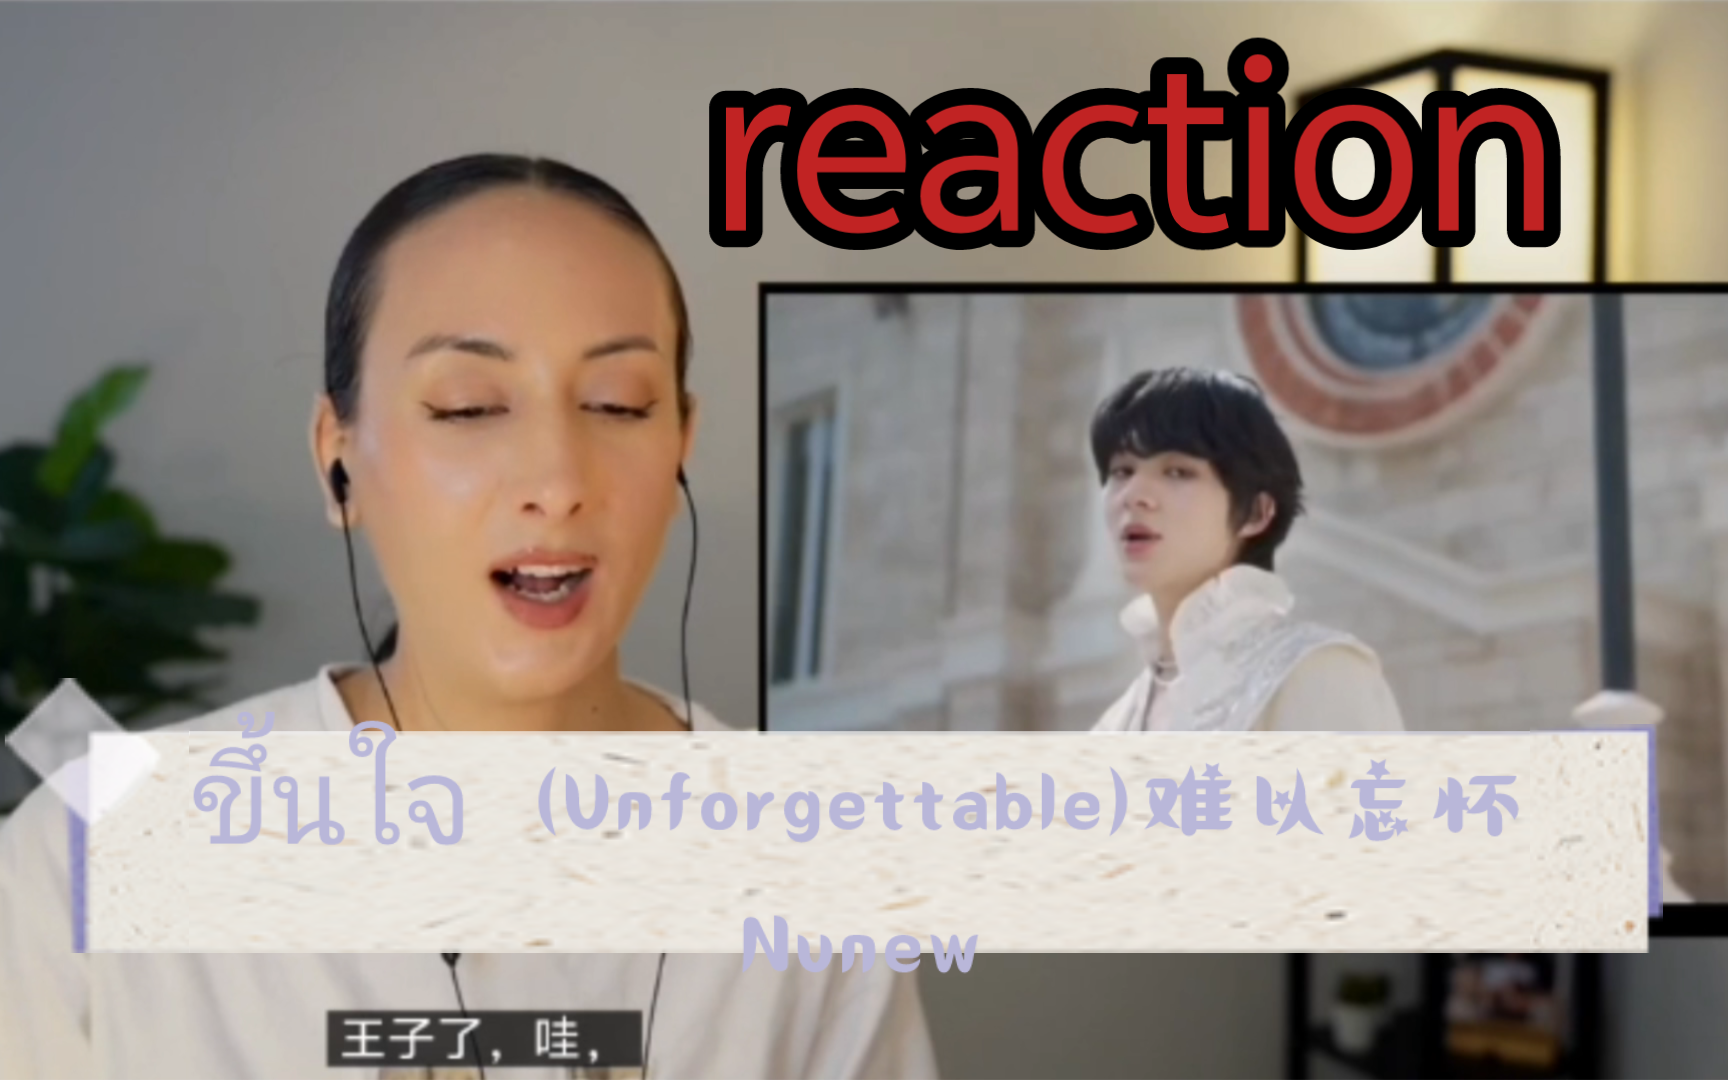 【reaction】ขึ้นใจ (Unforgettable)难以忘怀-Nunew